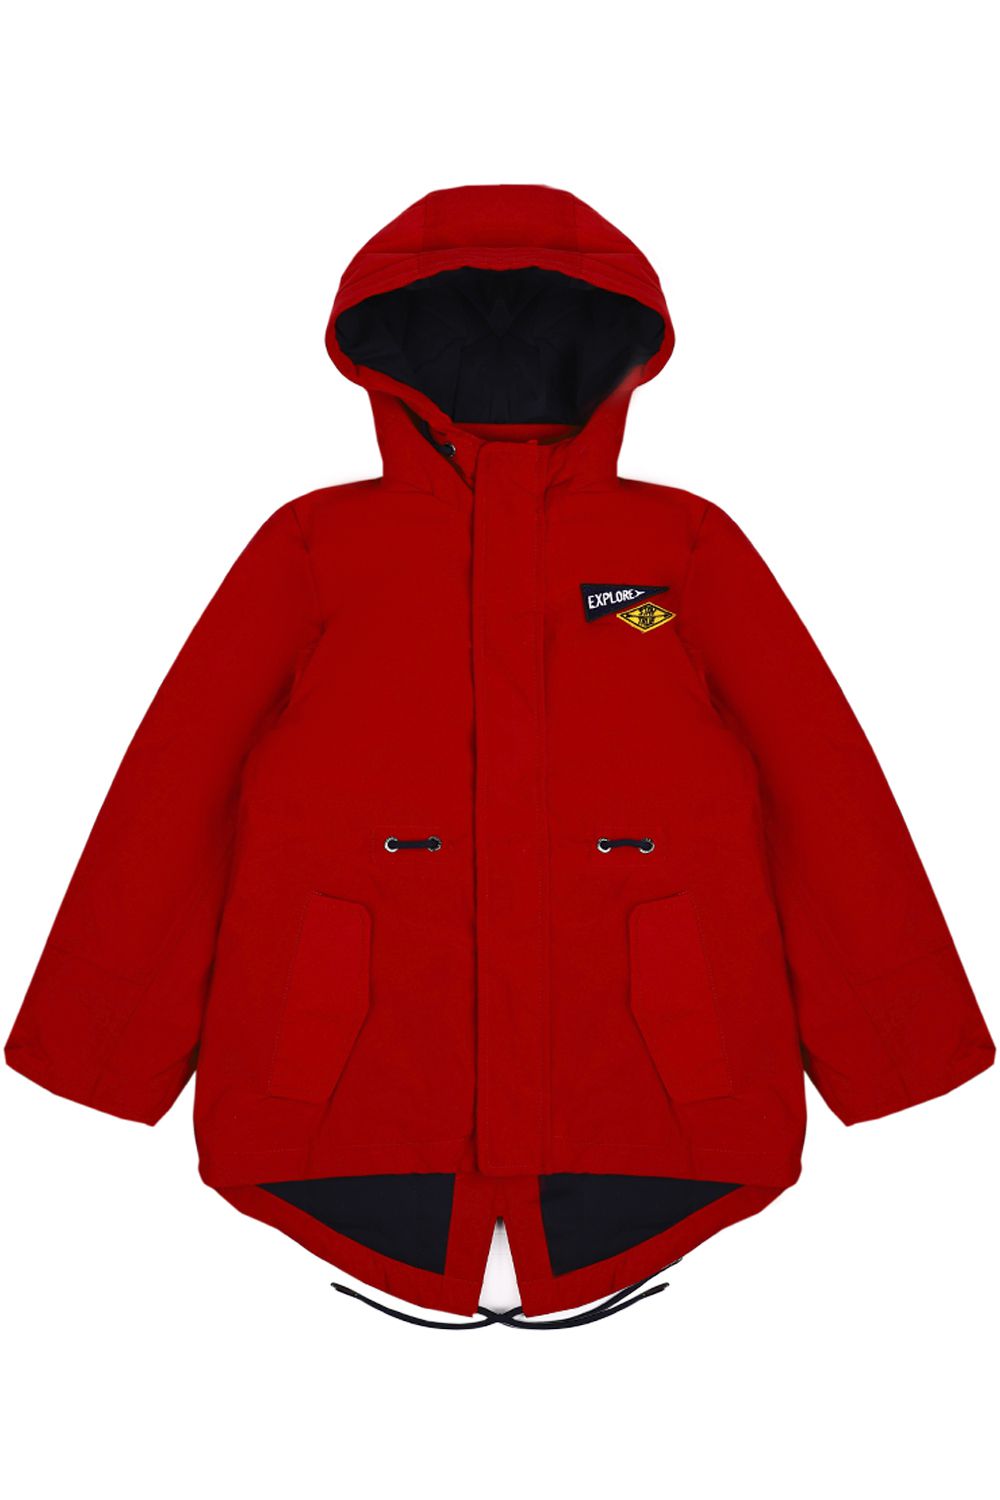 Куртка Noble People, размер 92, цвет красный - фото 2